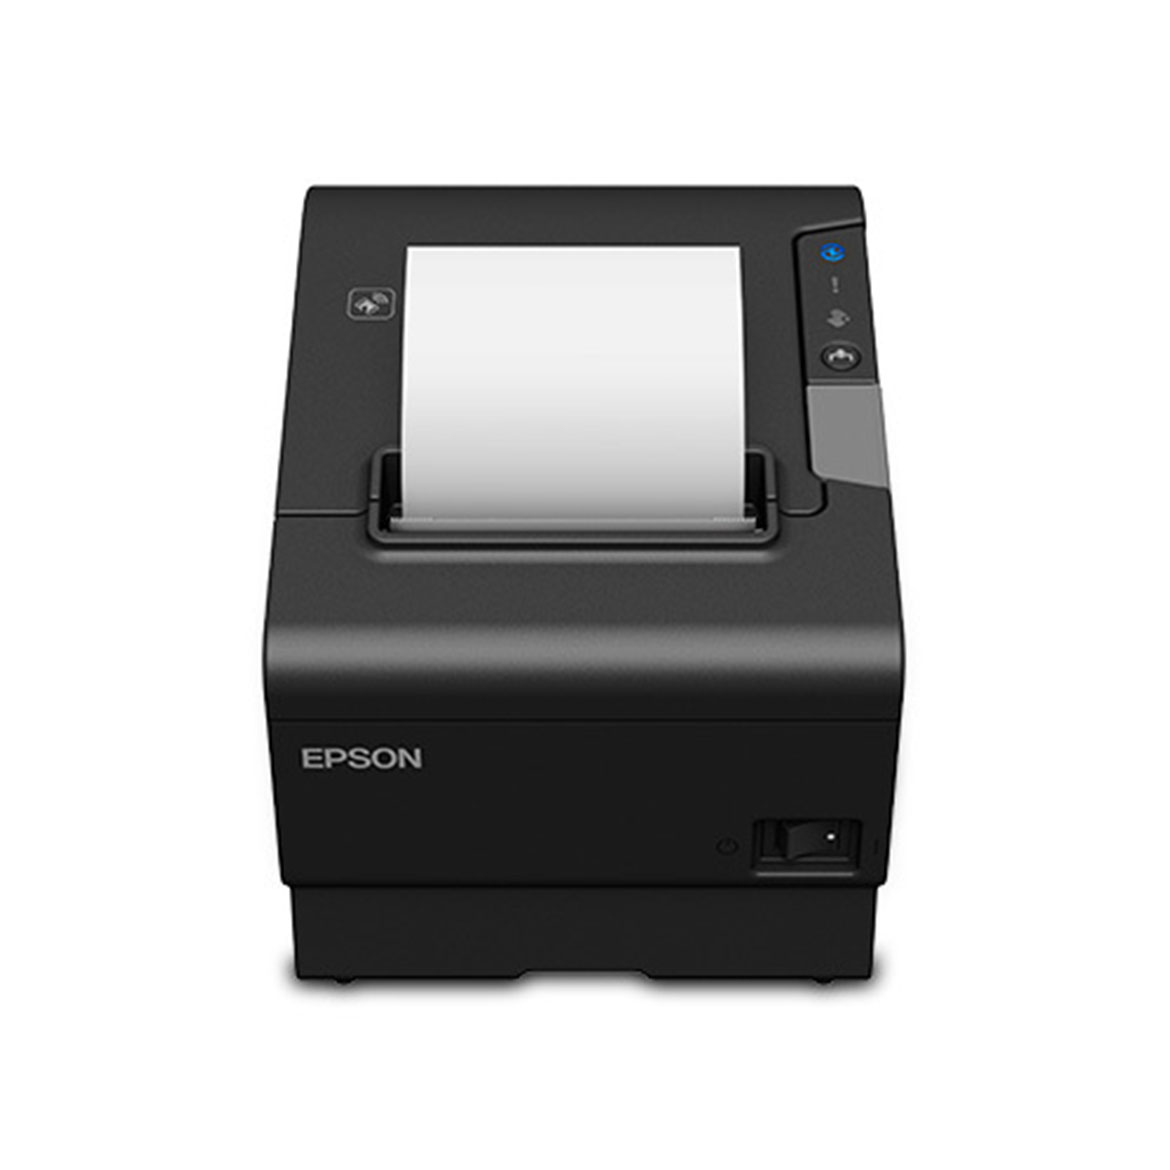 Black color Epson TM-88VI Thermal receipt printer front image